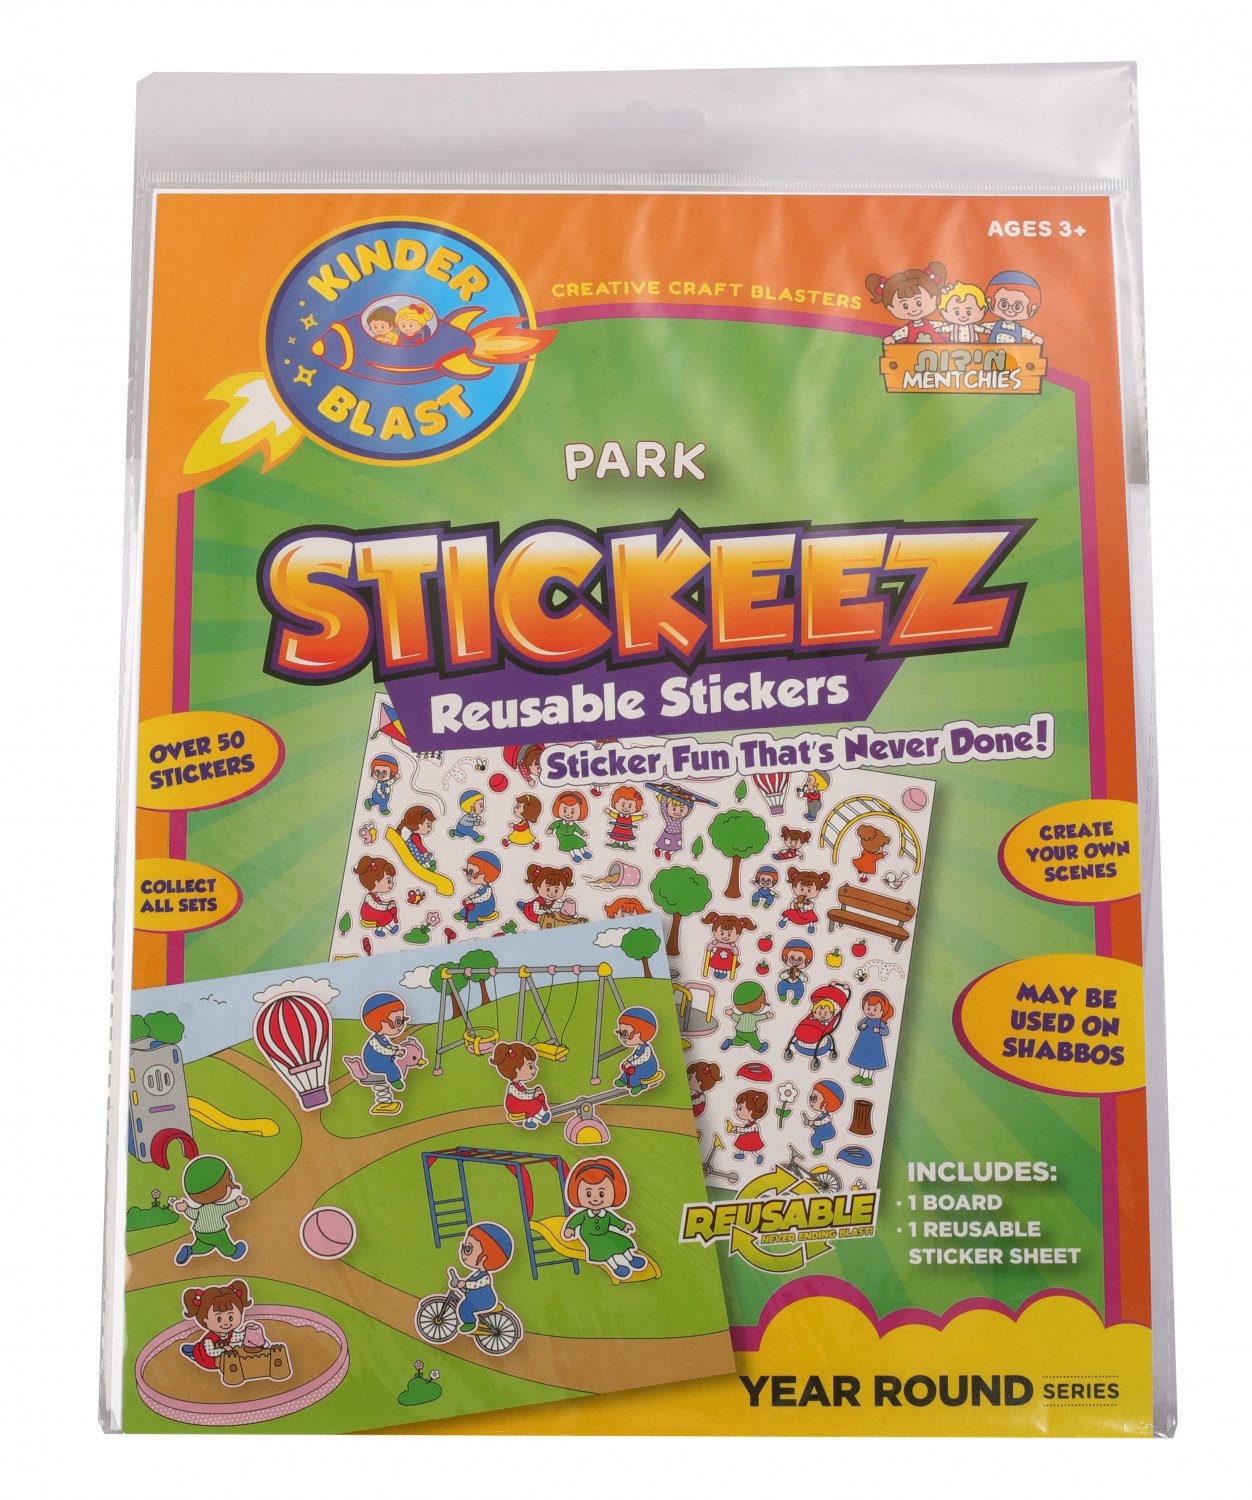 Park Stickeez - Reusable Stickers